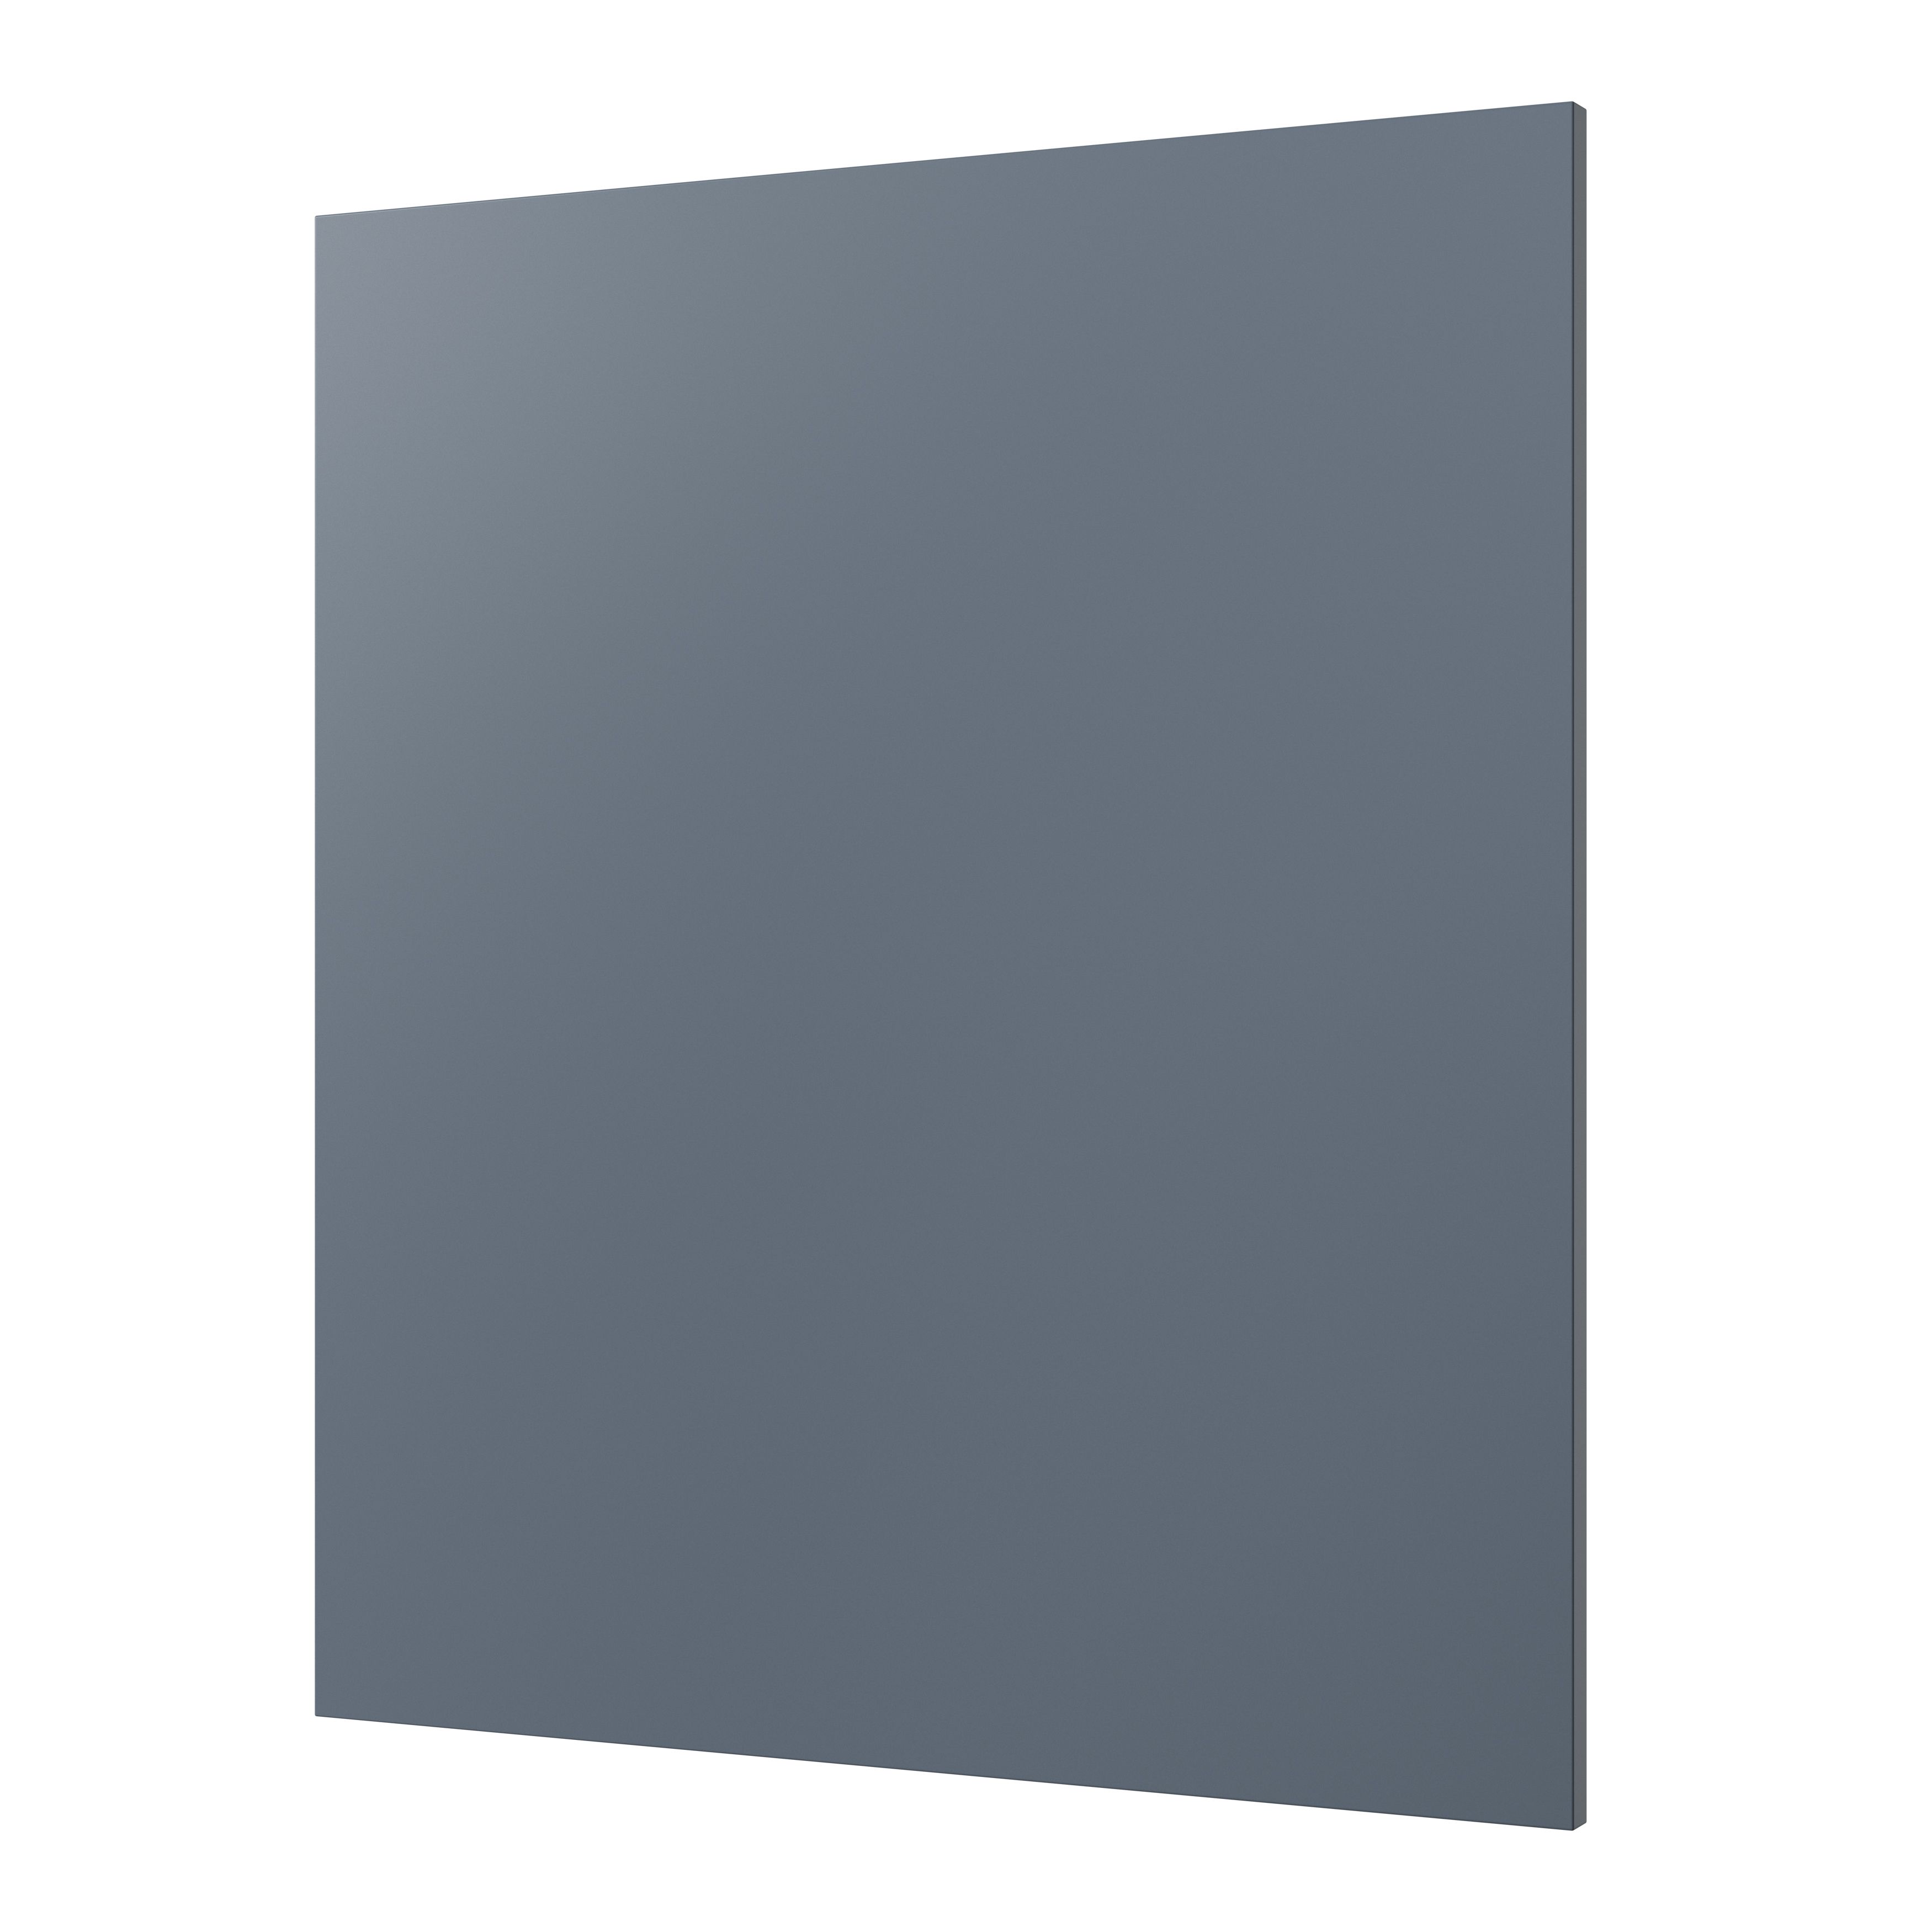 GoodHome Alisma Matt blue slab Appliance Cabinet door (W)600mm (H)687mm (T)18mm